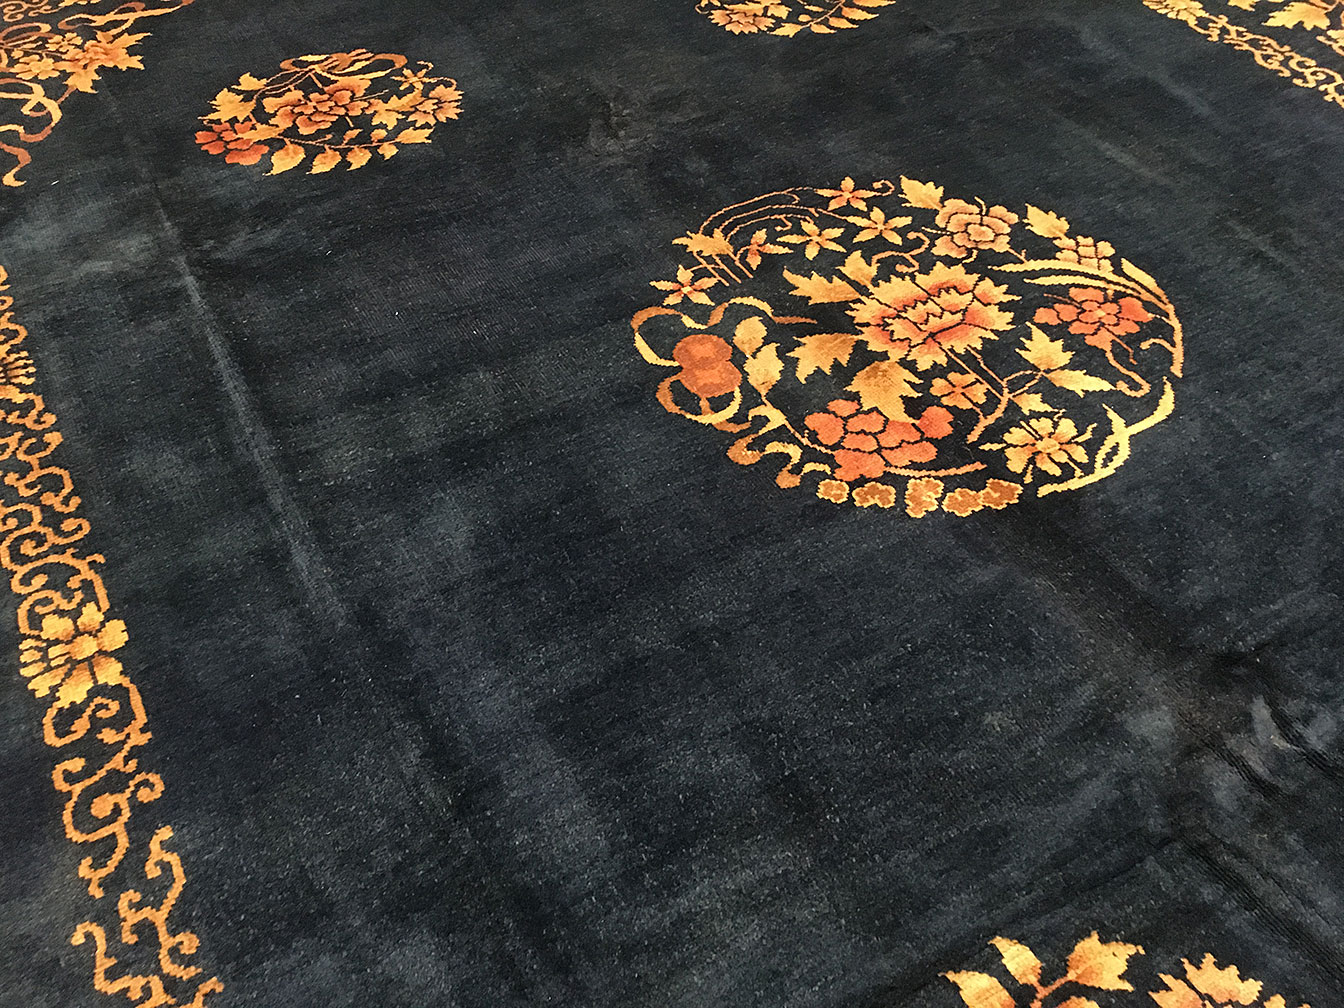 Antique chinese Carpet - # 53295